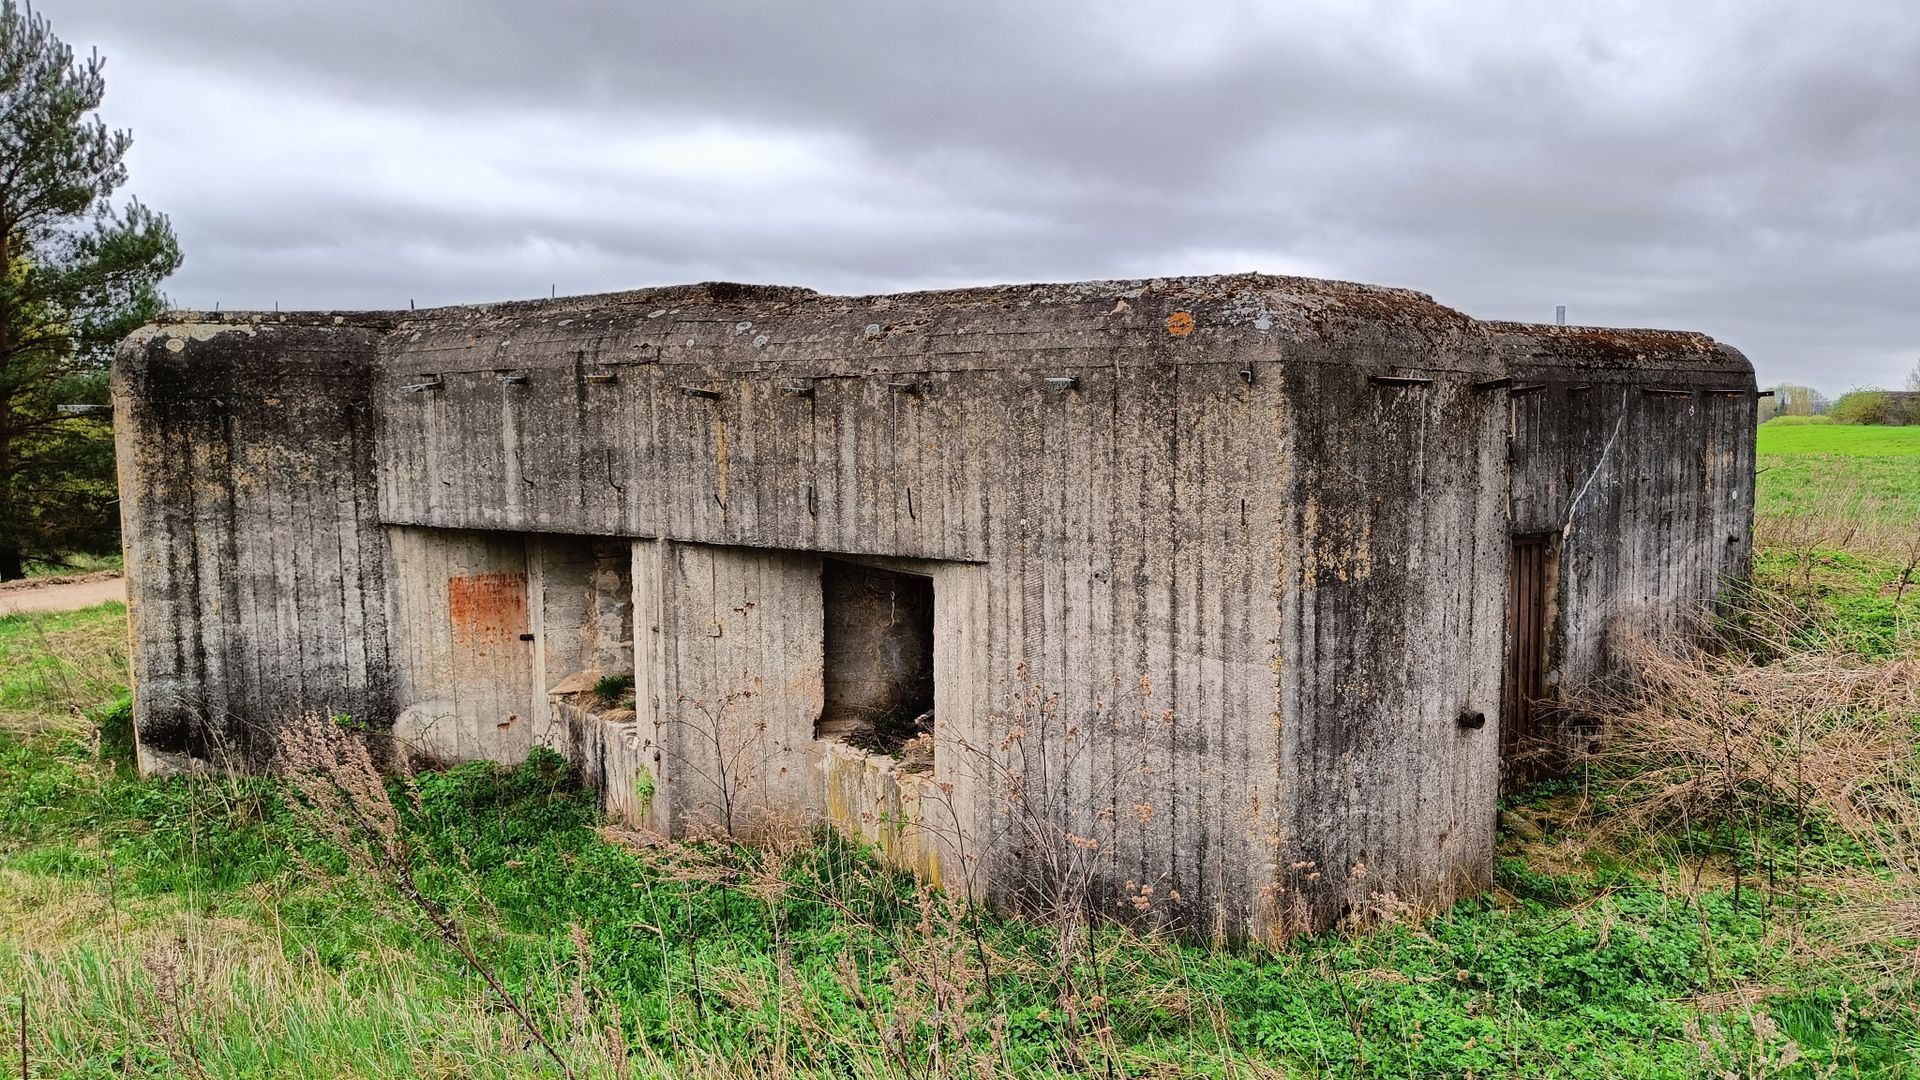 Molotovo linijos bunkeris (Brazavas)